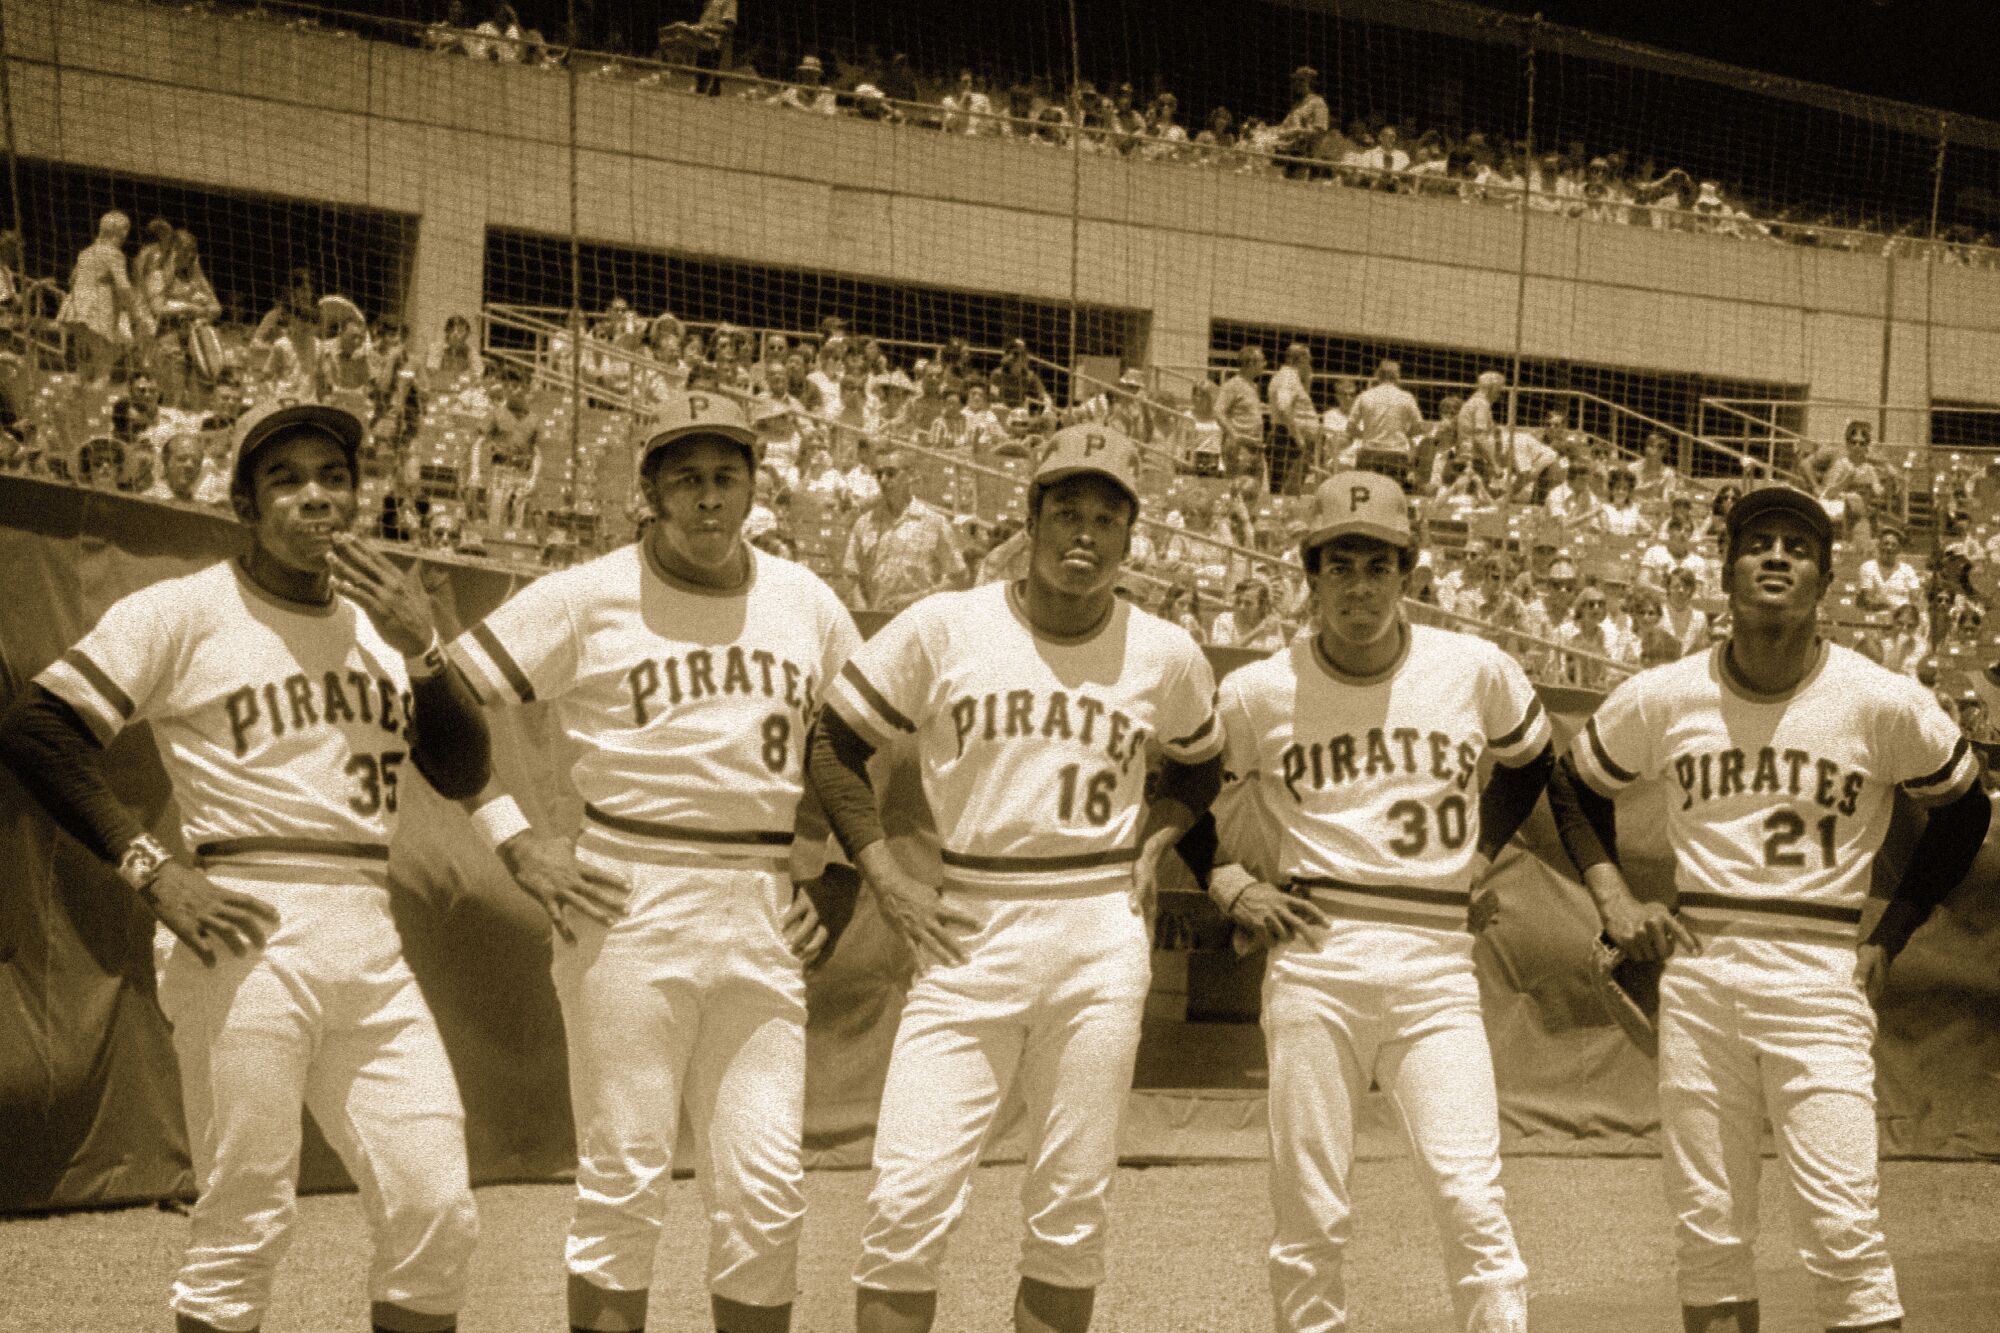 Diversity milestone: '71 Pirates had an all-Black lineup - Los Angeles Times